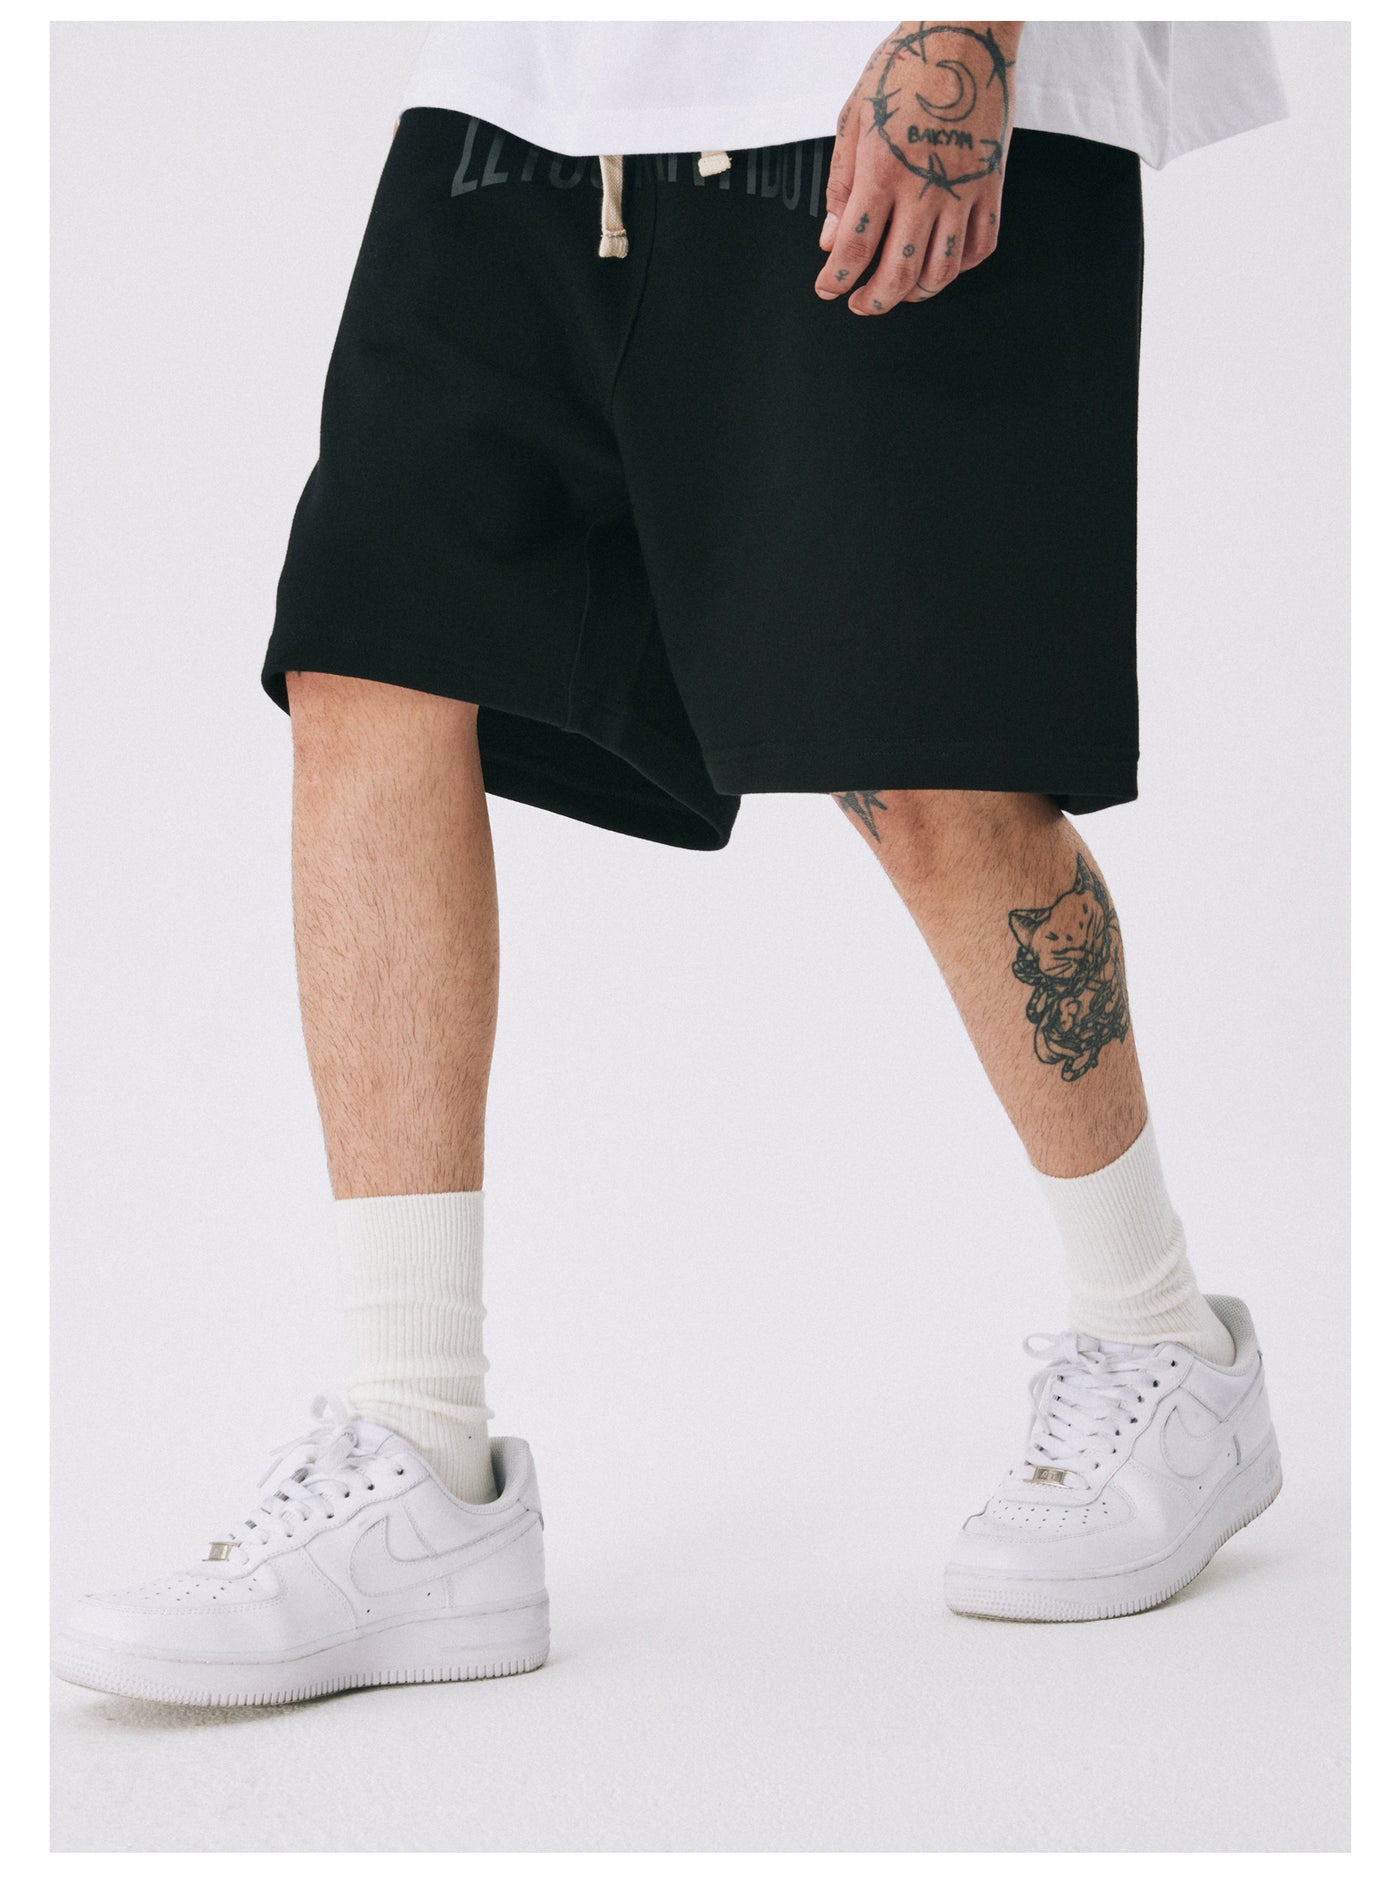 ANTIDOTE Crotch Print Sweatpants Shorts